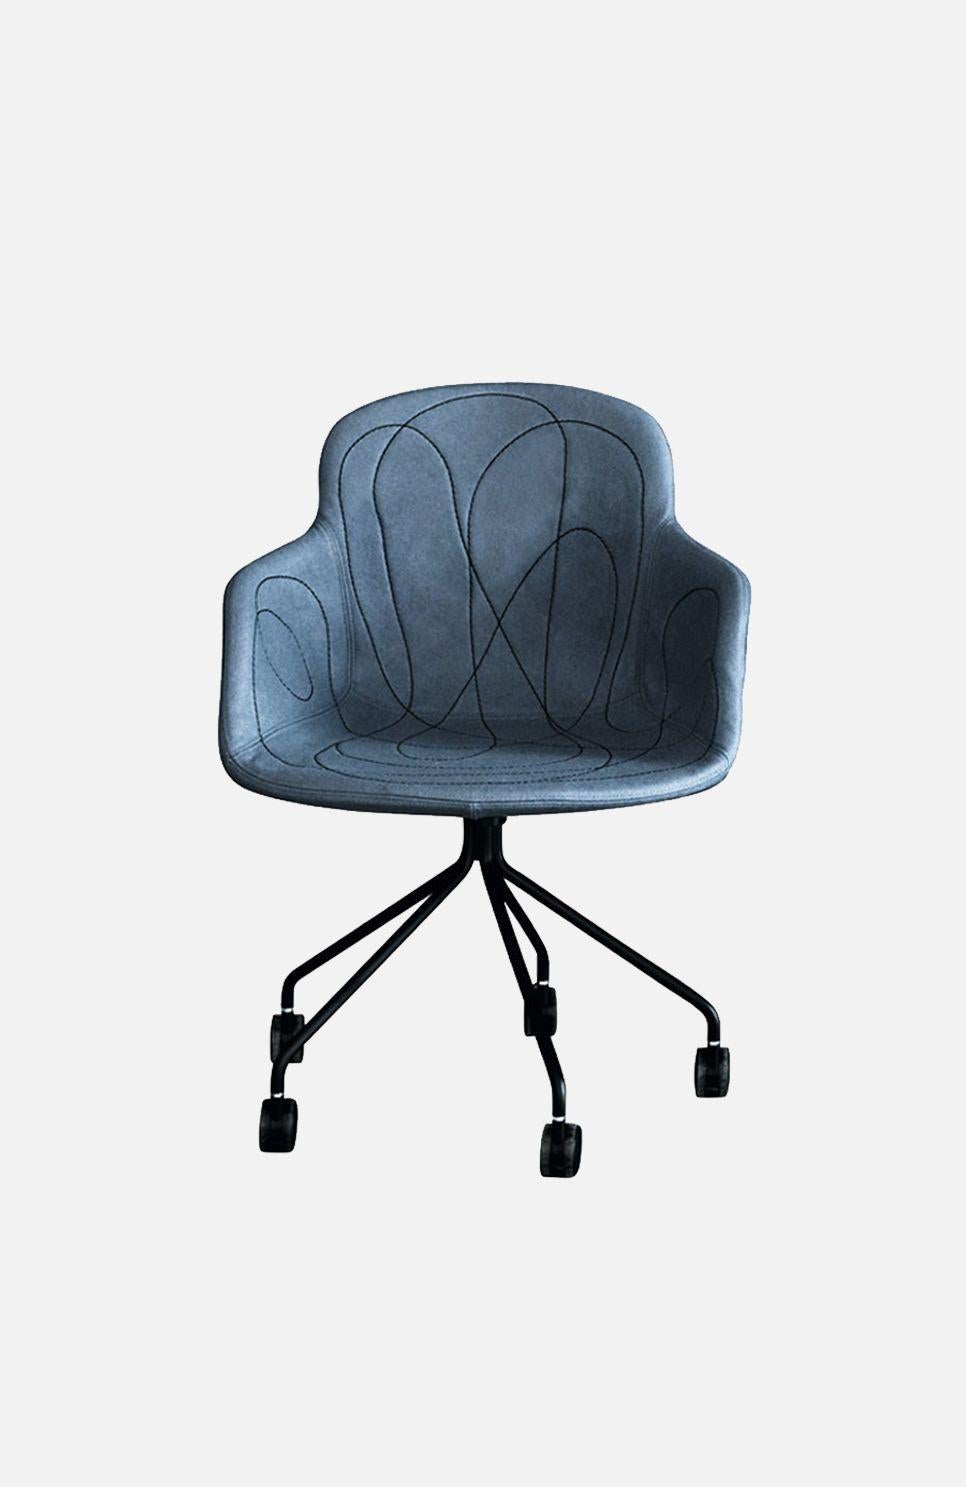 Customizable New Tacchini Doodle Chair Designed by Claesson Koivisto Rune 4